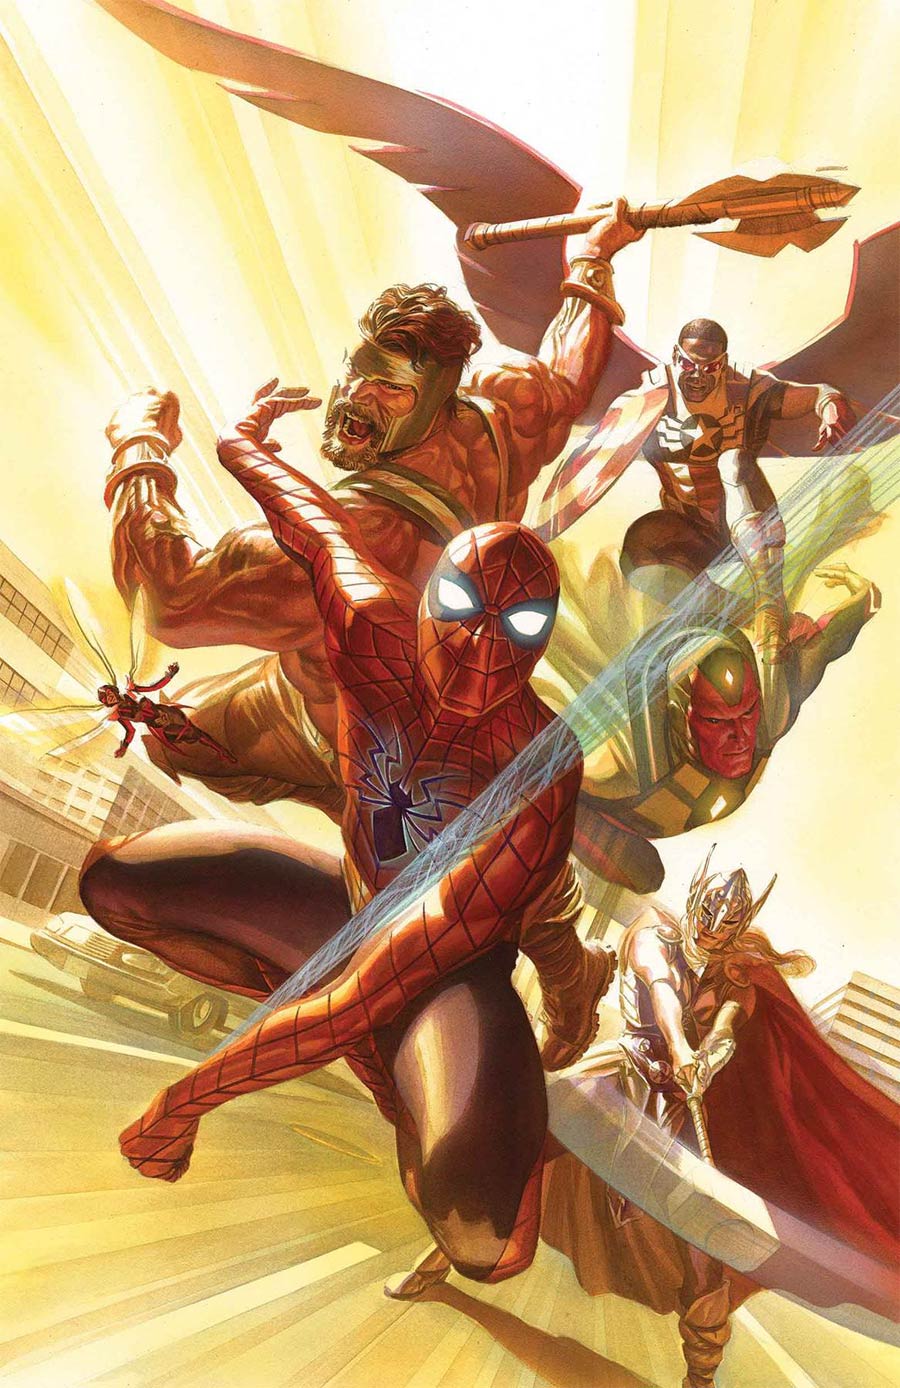 Avengers Vol 6 #4 By Alex Ross Poster